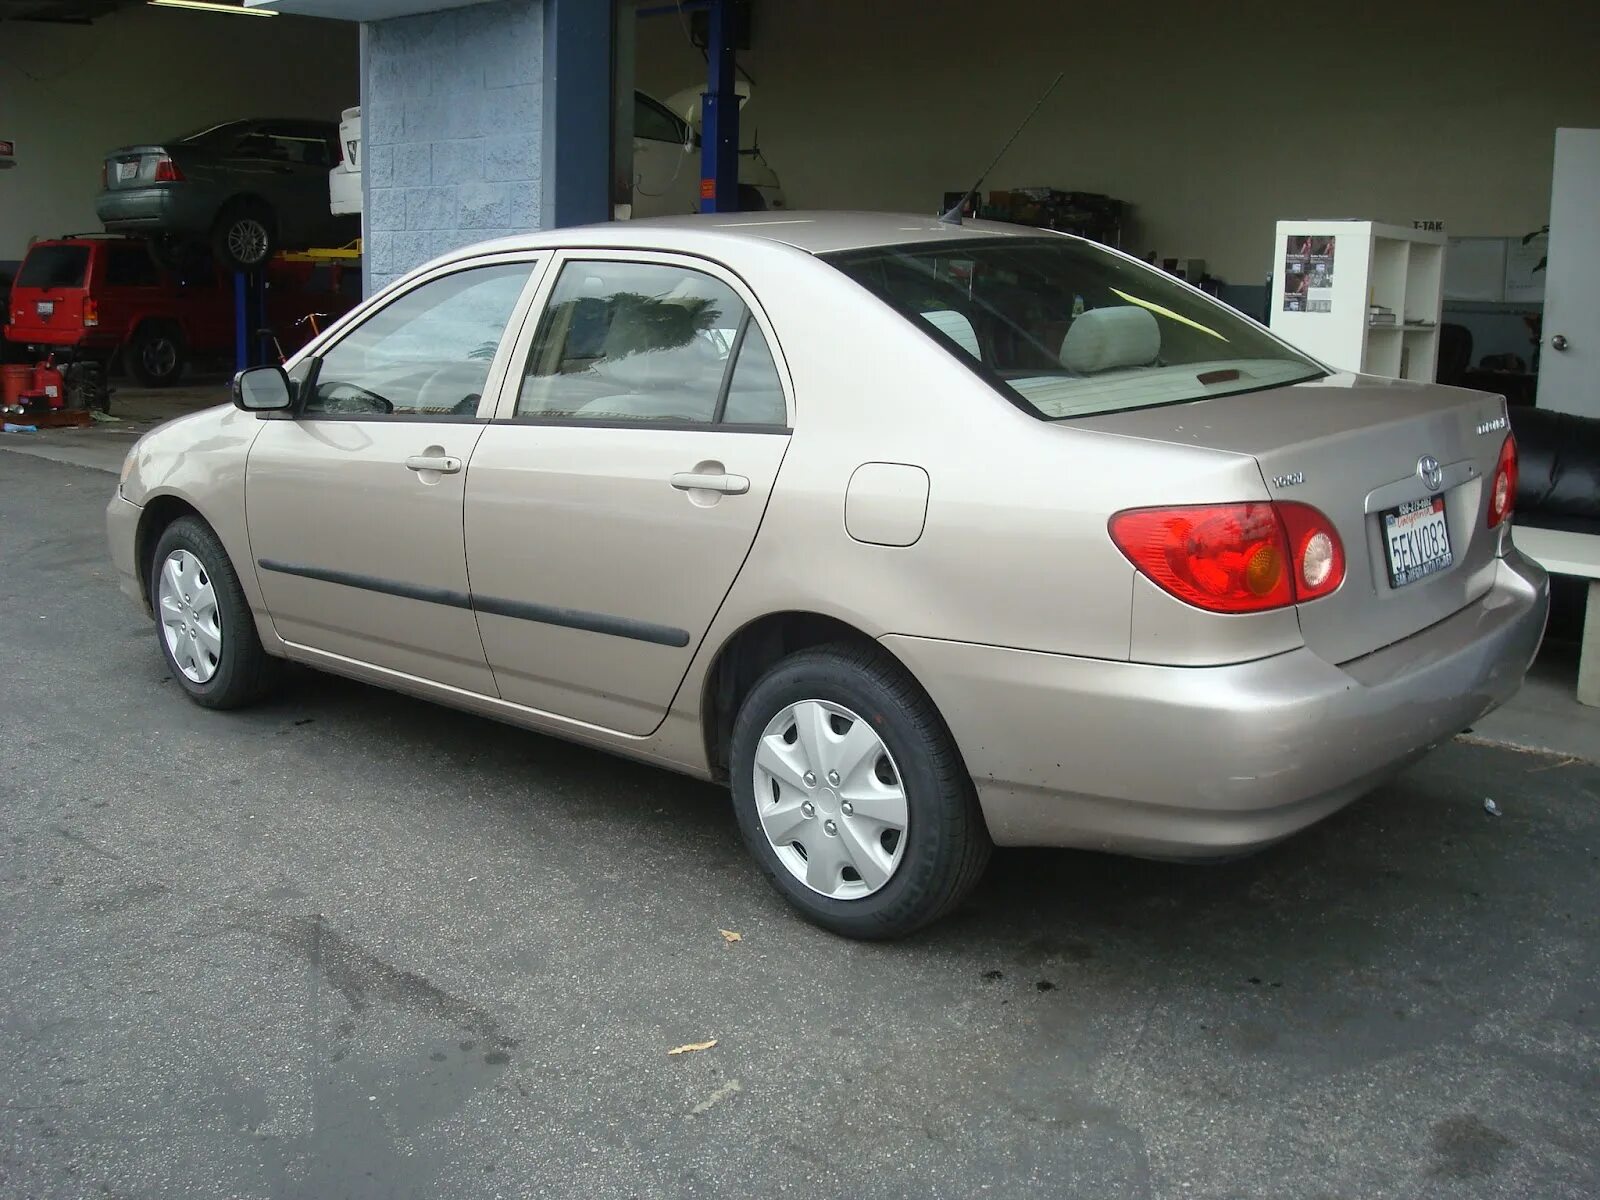 Toyota Corolla 2003. Тойота Королла 2003. Тойта Карола 2003. Тойота Corolla 2003.